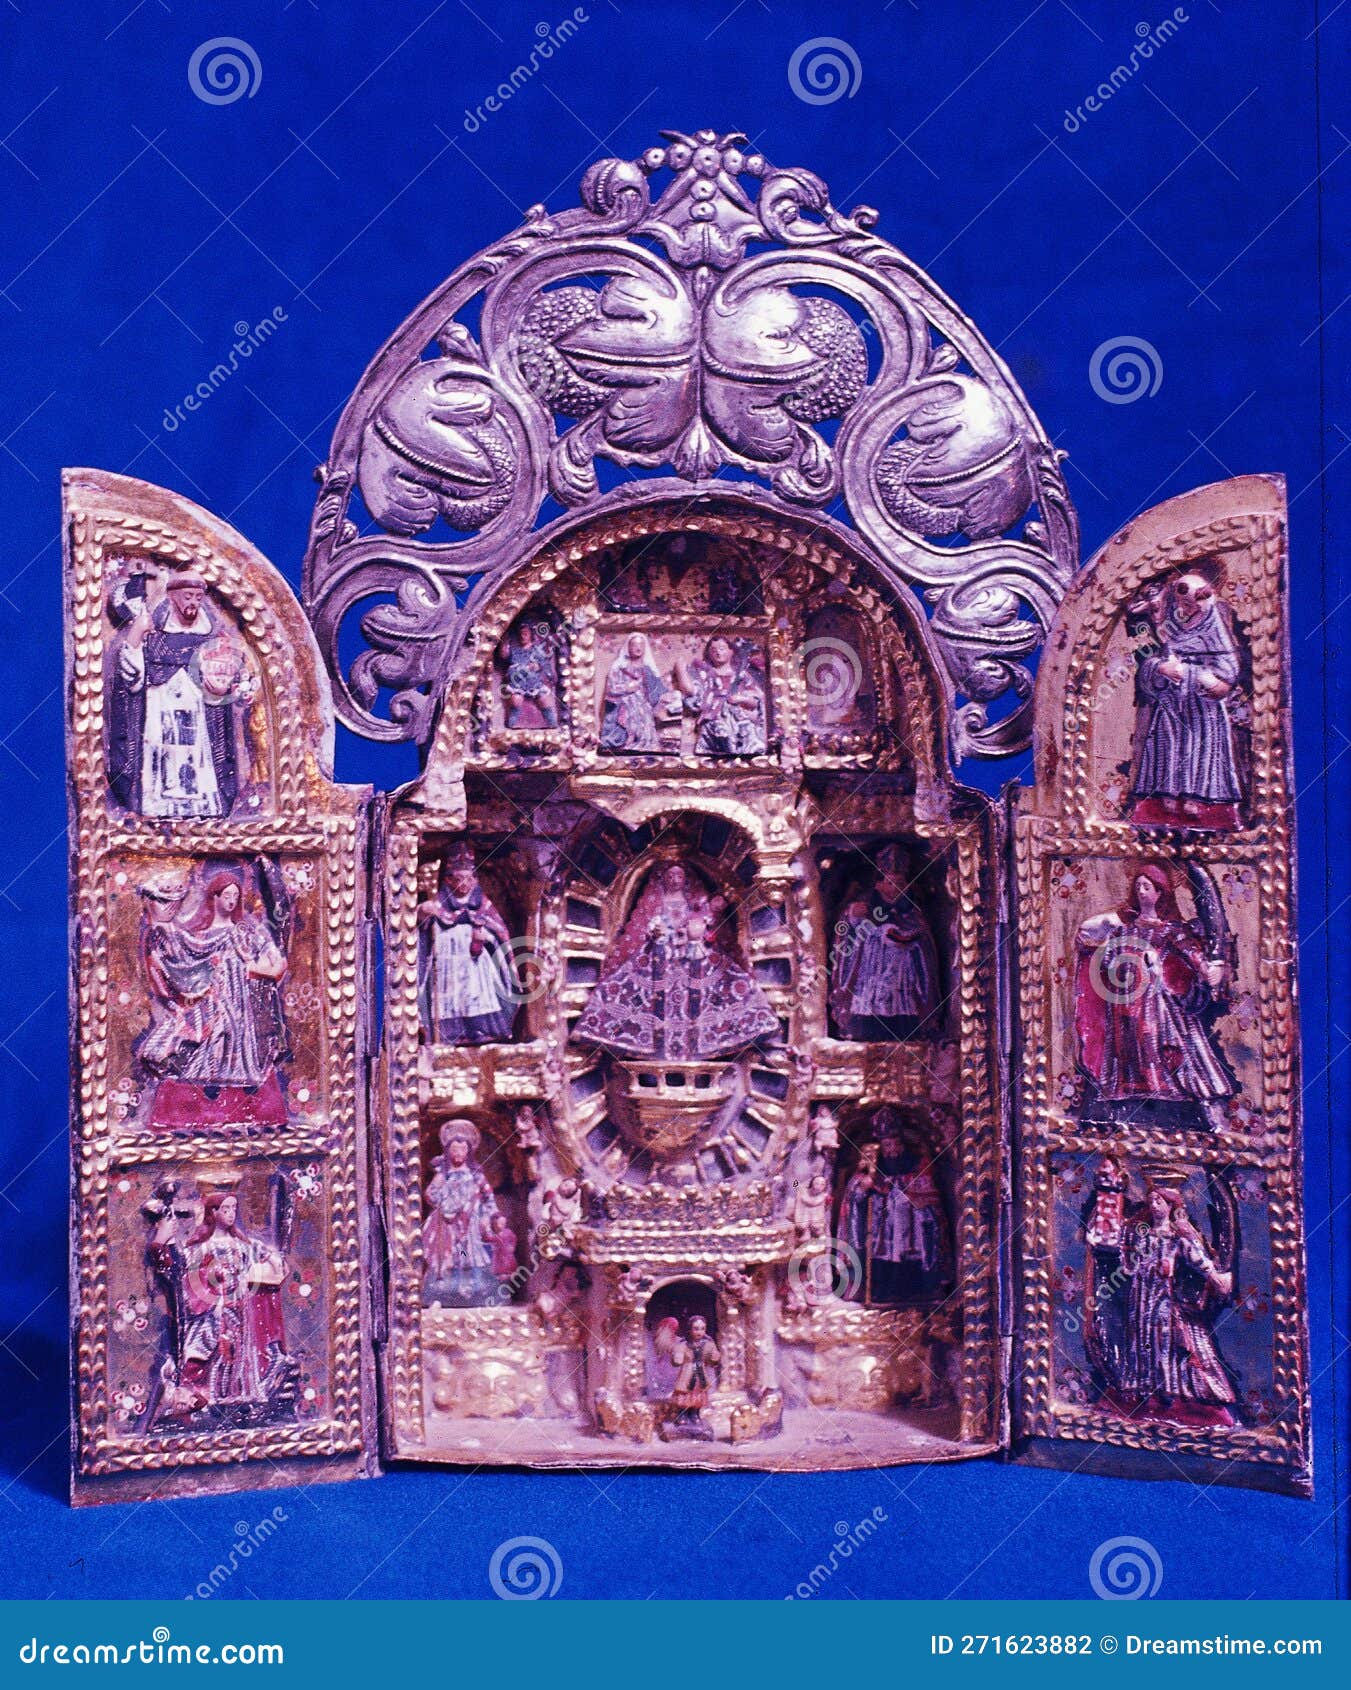 ayacucho, peru a traditional 'retablo', a typical historical 17 century peruvian handicraft from the ayacucho region